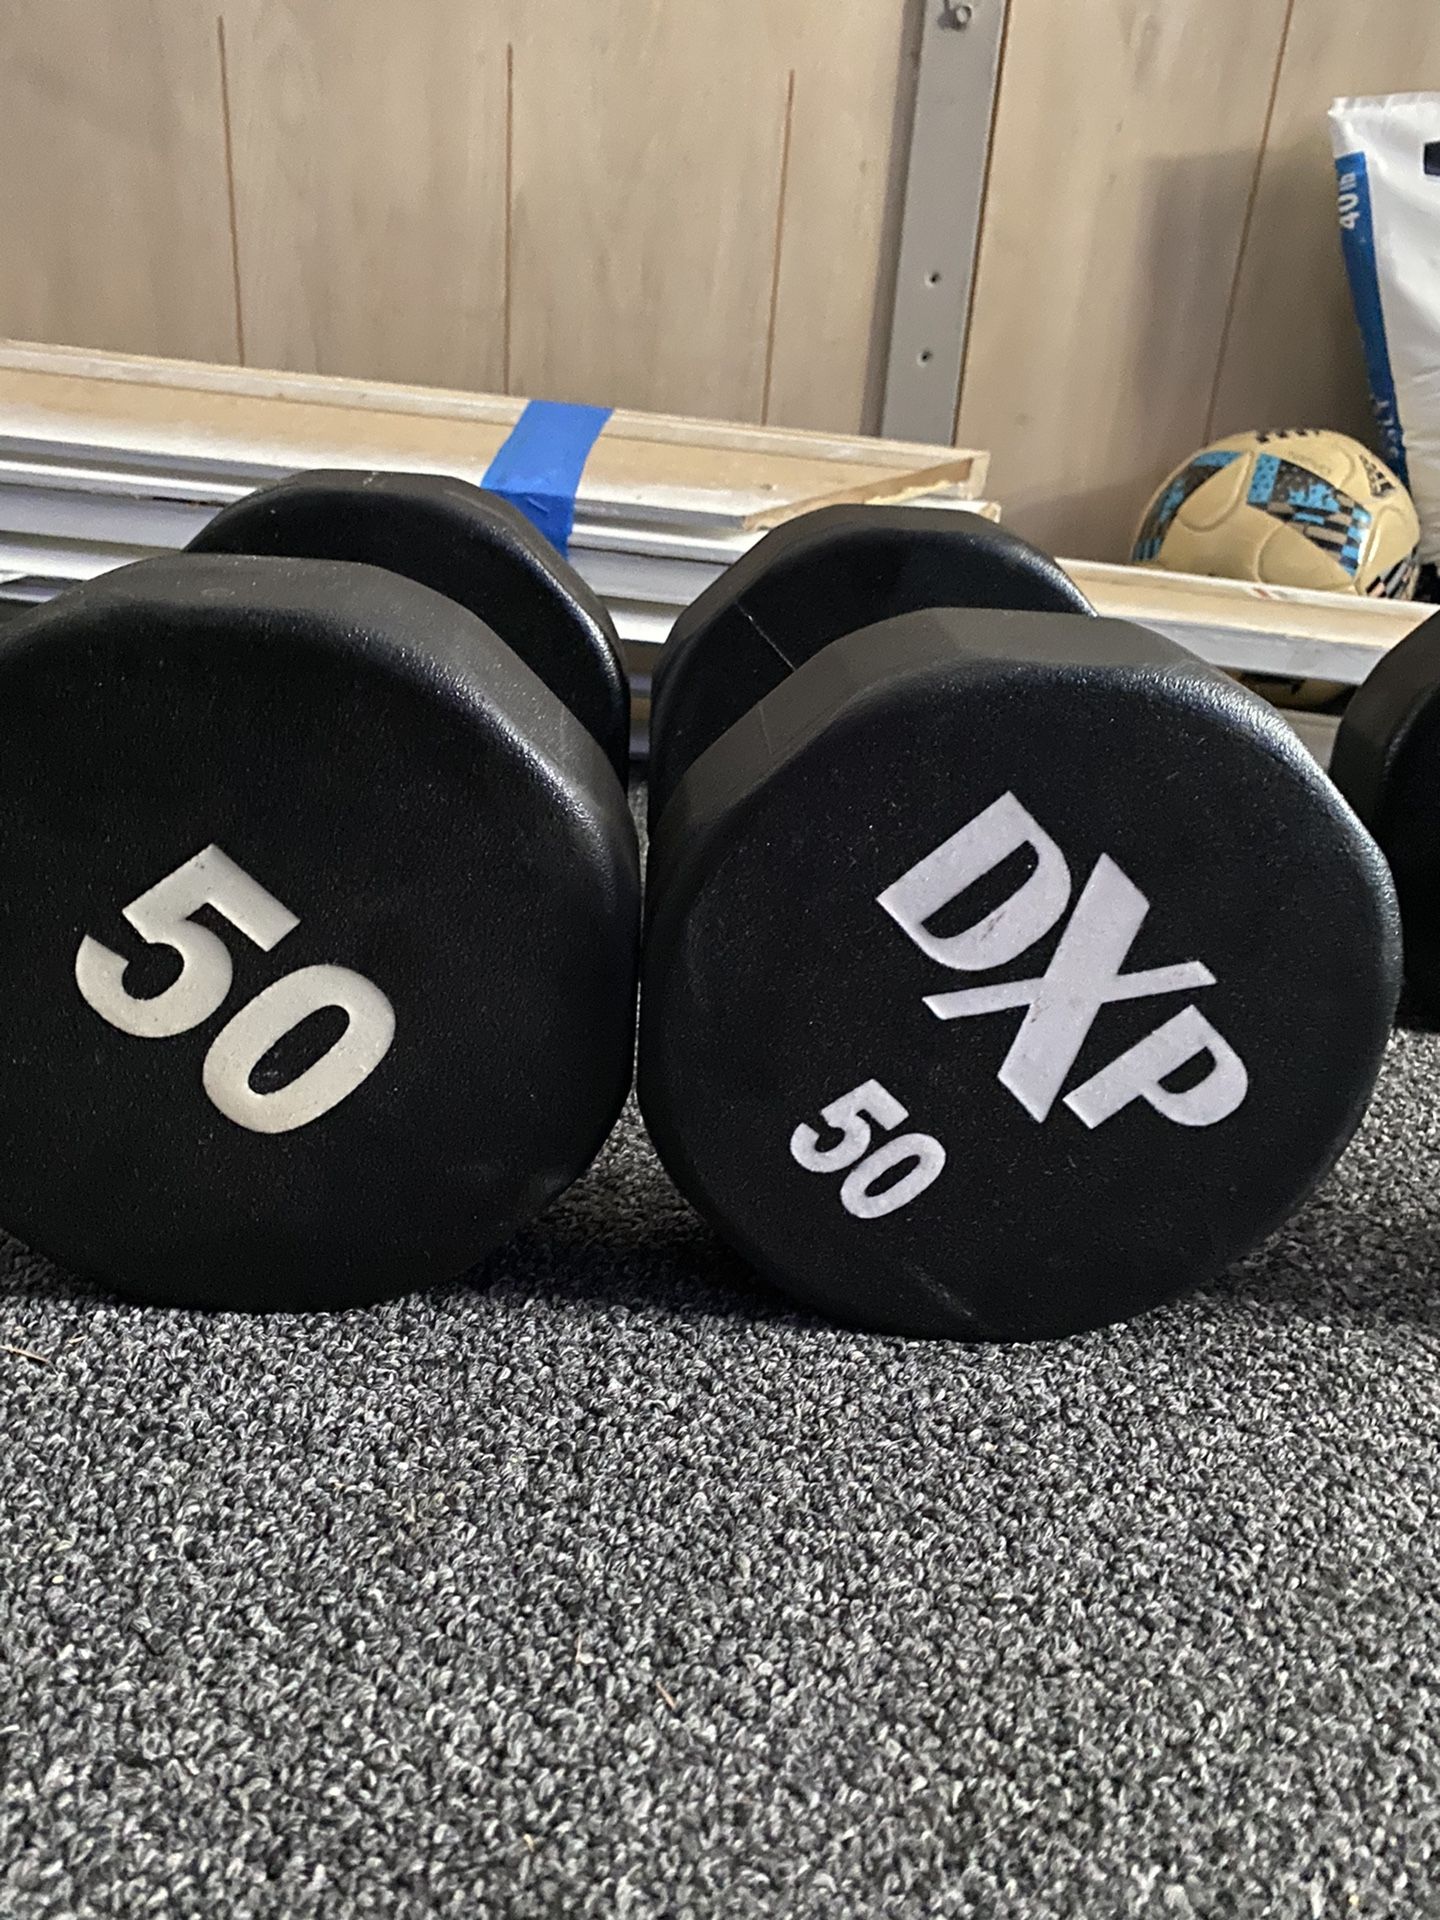 Commercial grade DXP 50lb dumbbells/weights